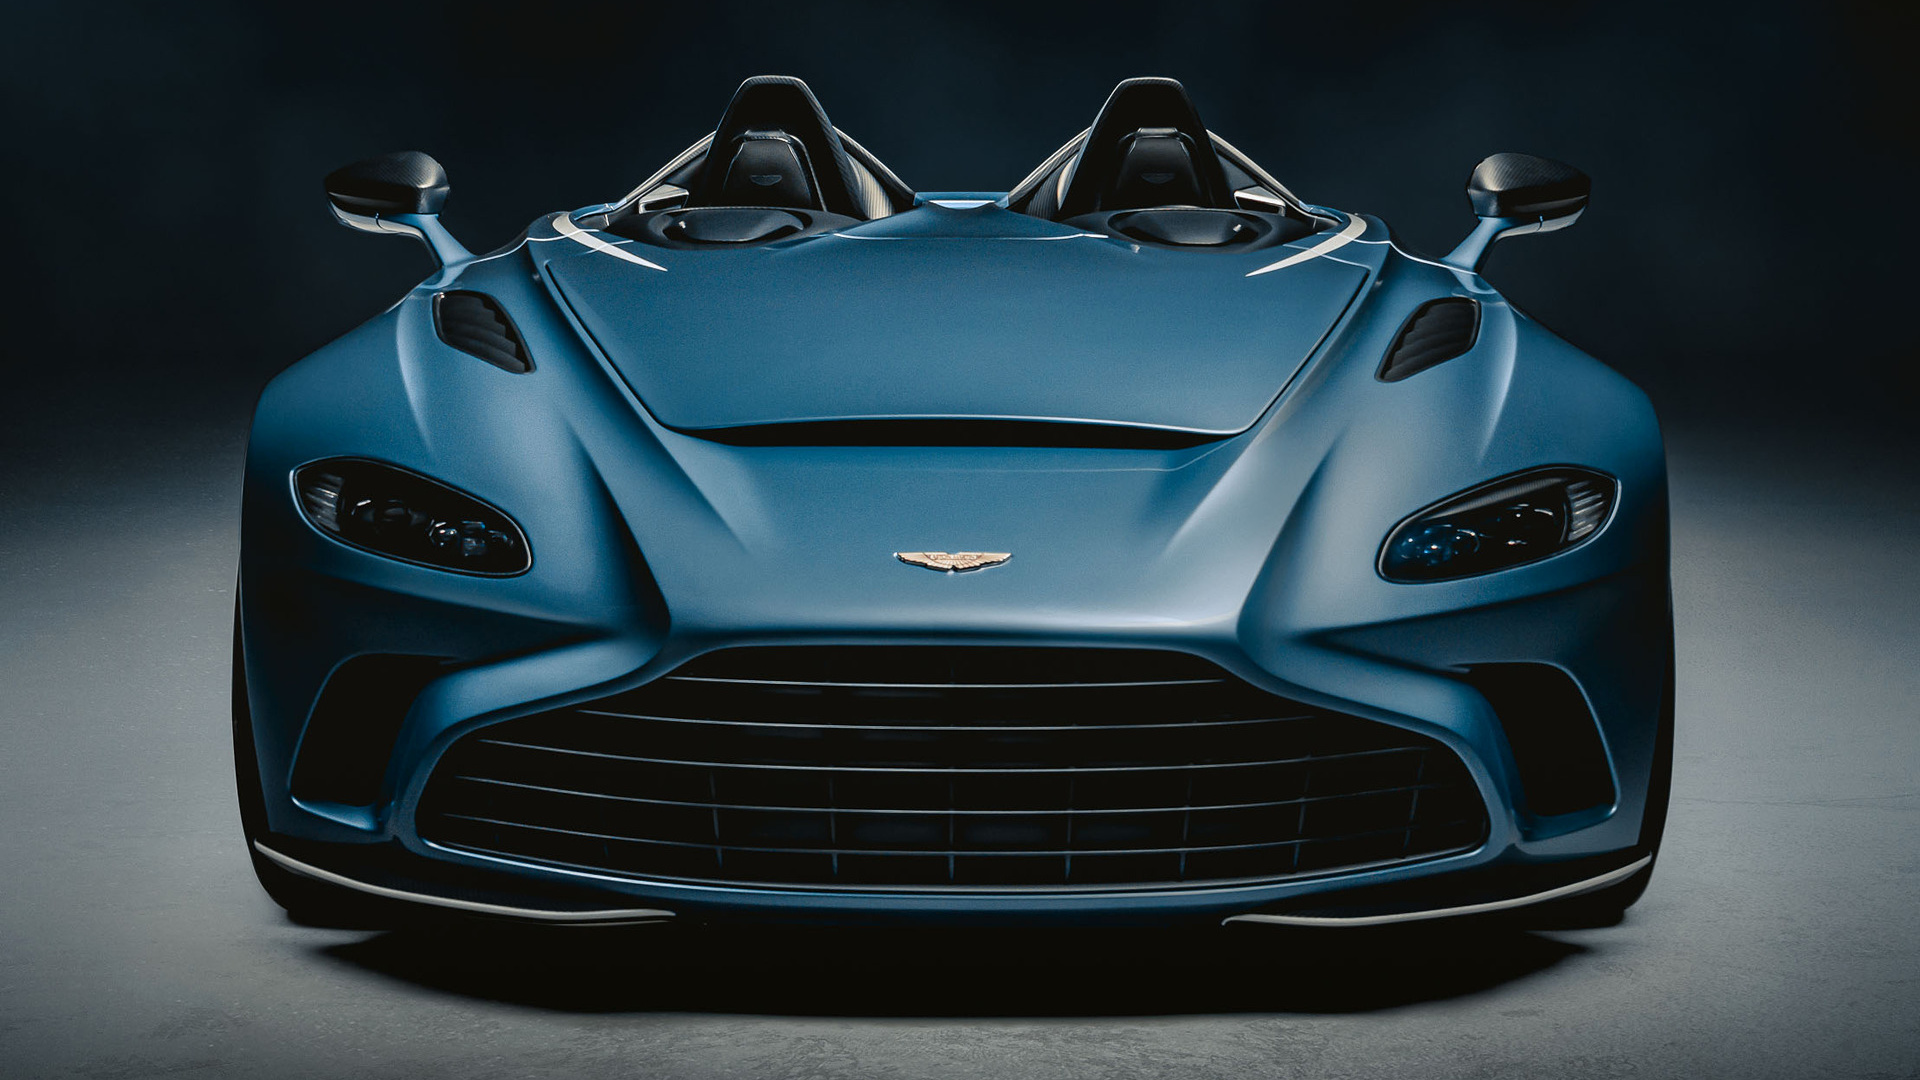 Aston Martin V12 Speedster and HD Image